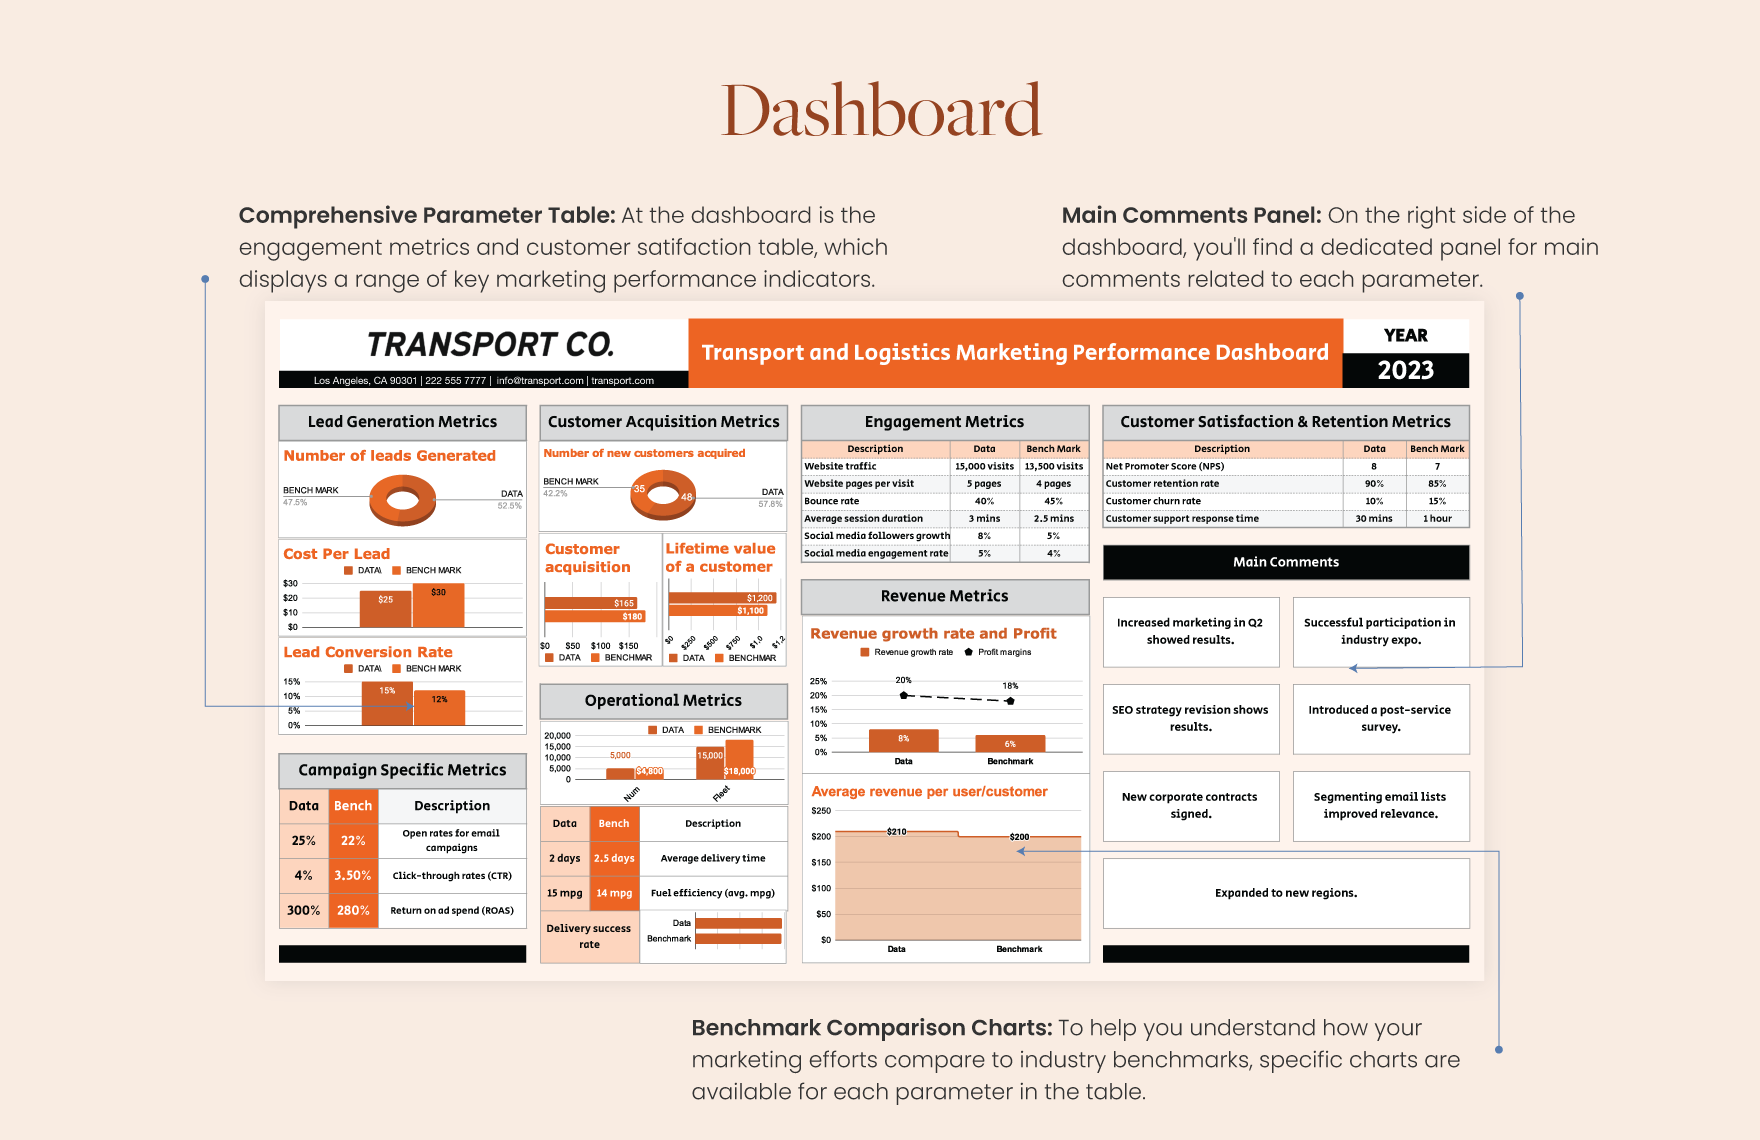 Transport and Logistics Marketing Performance Dashboard Template